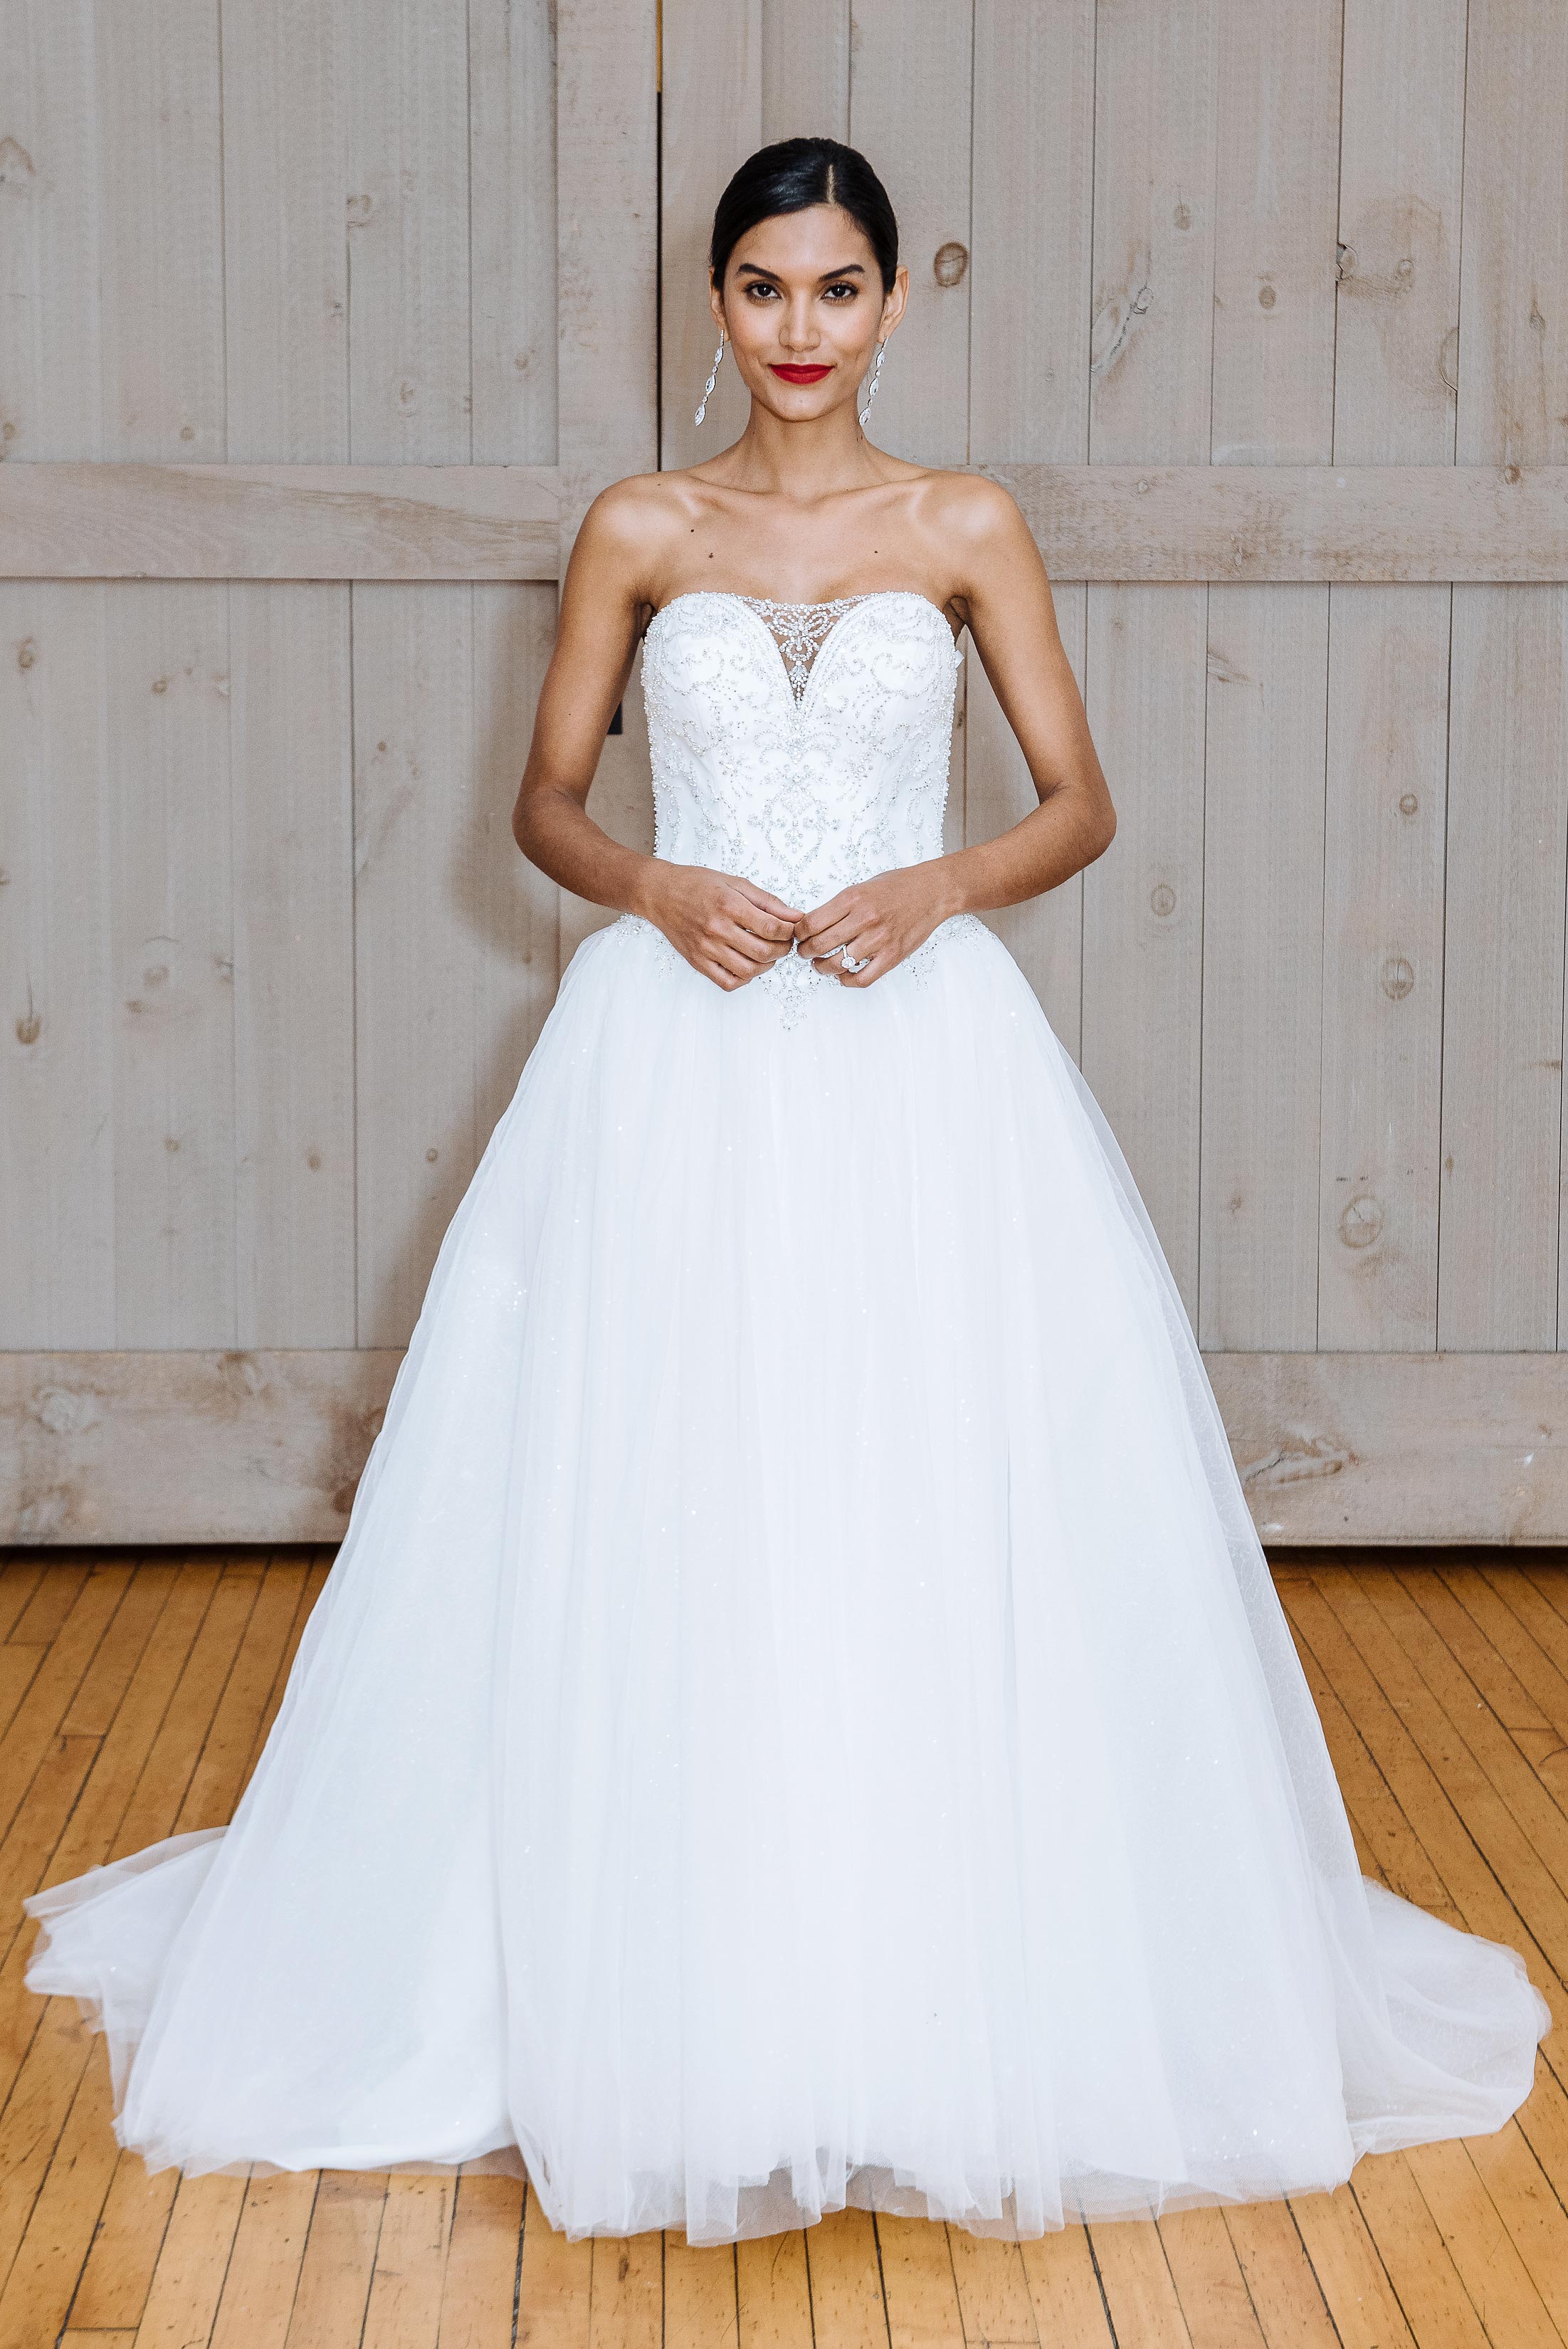 David Bridal Wedding Dresses Top Review david bridal wedding dresses ...